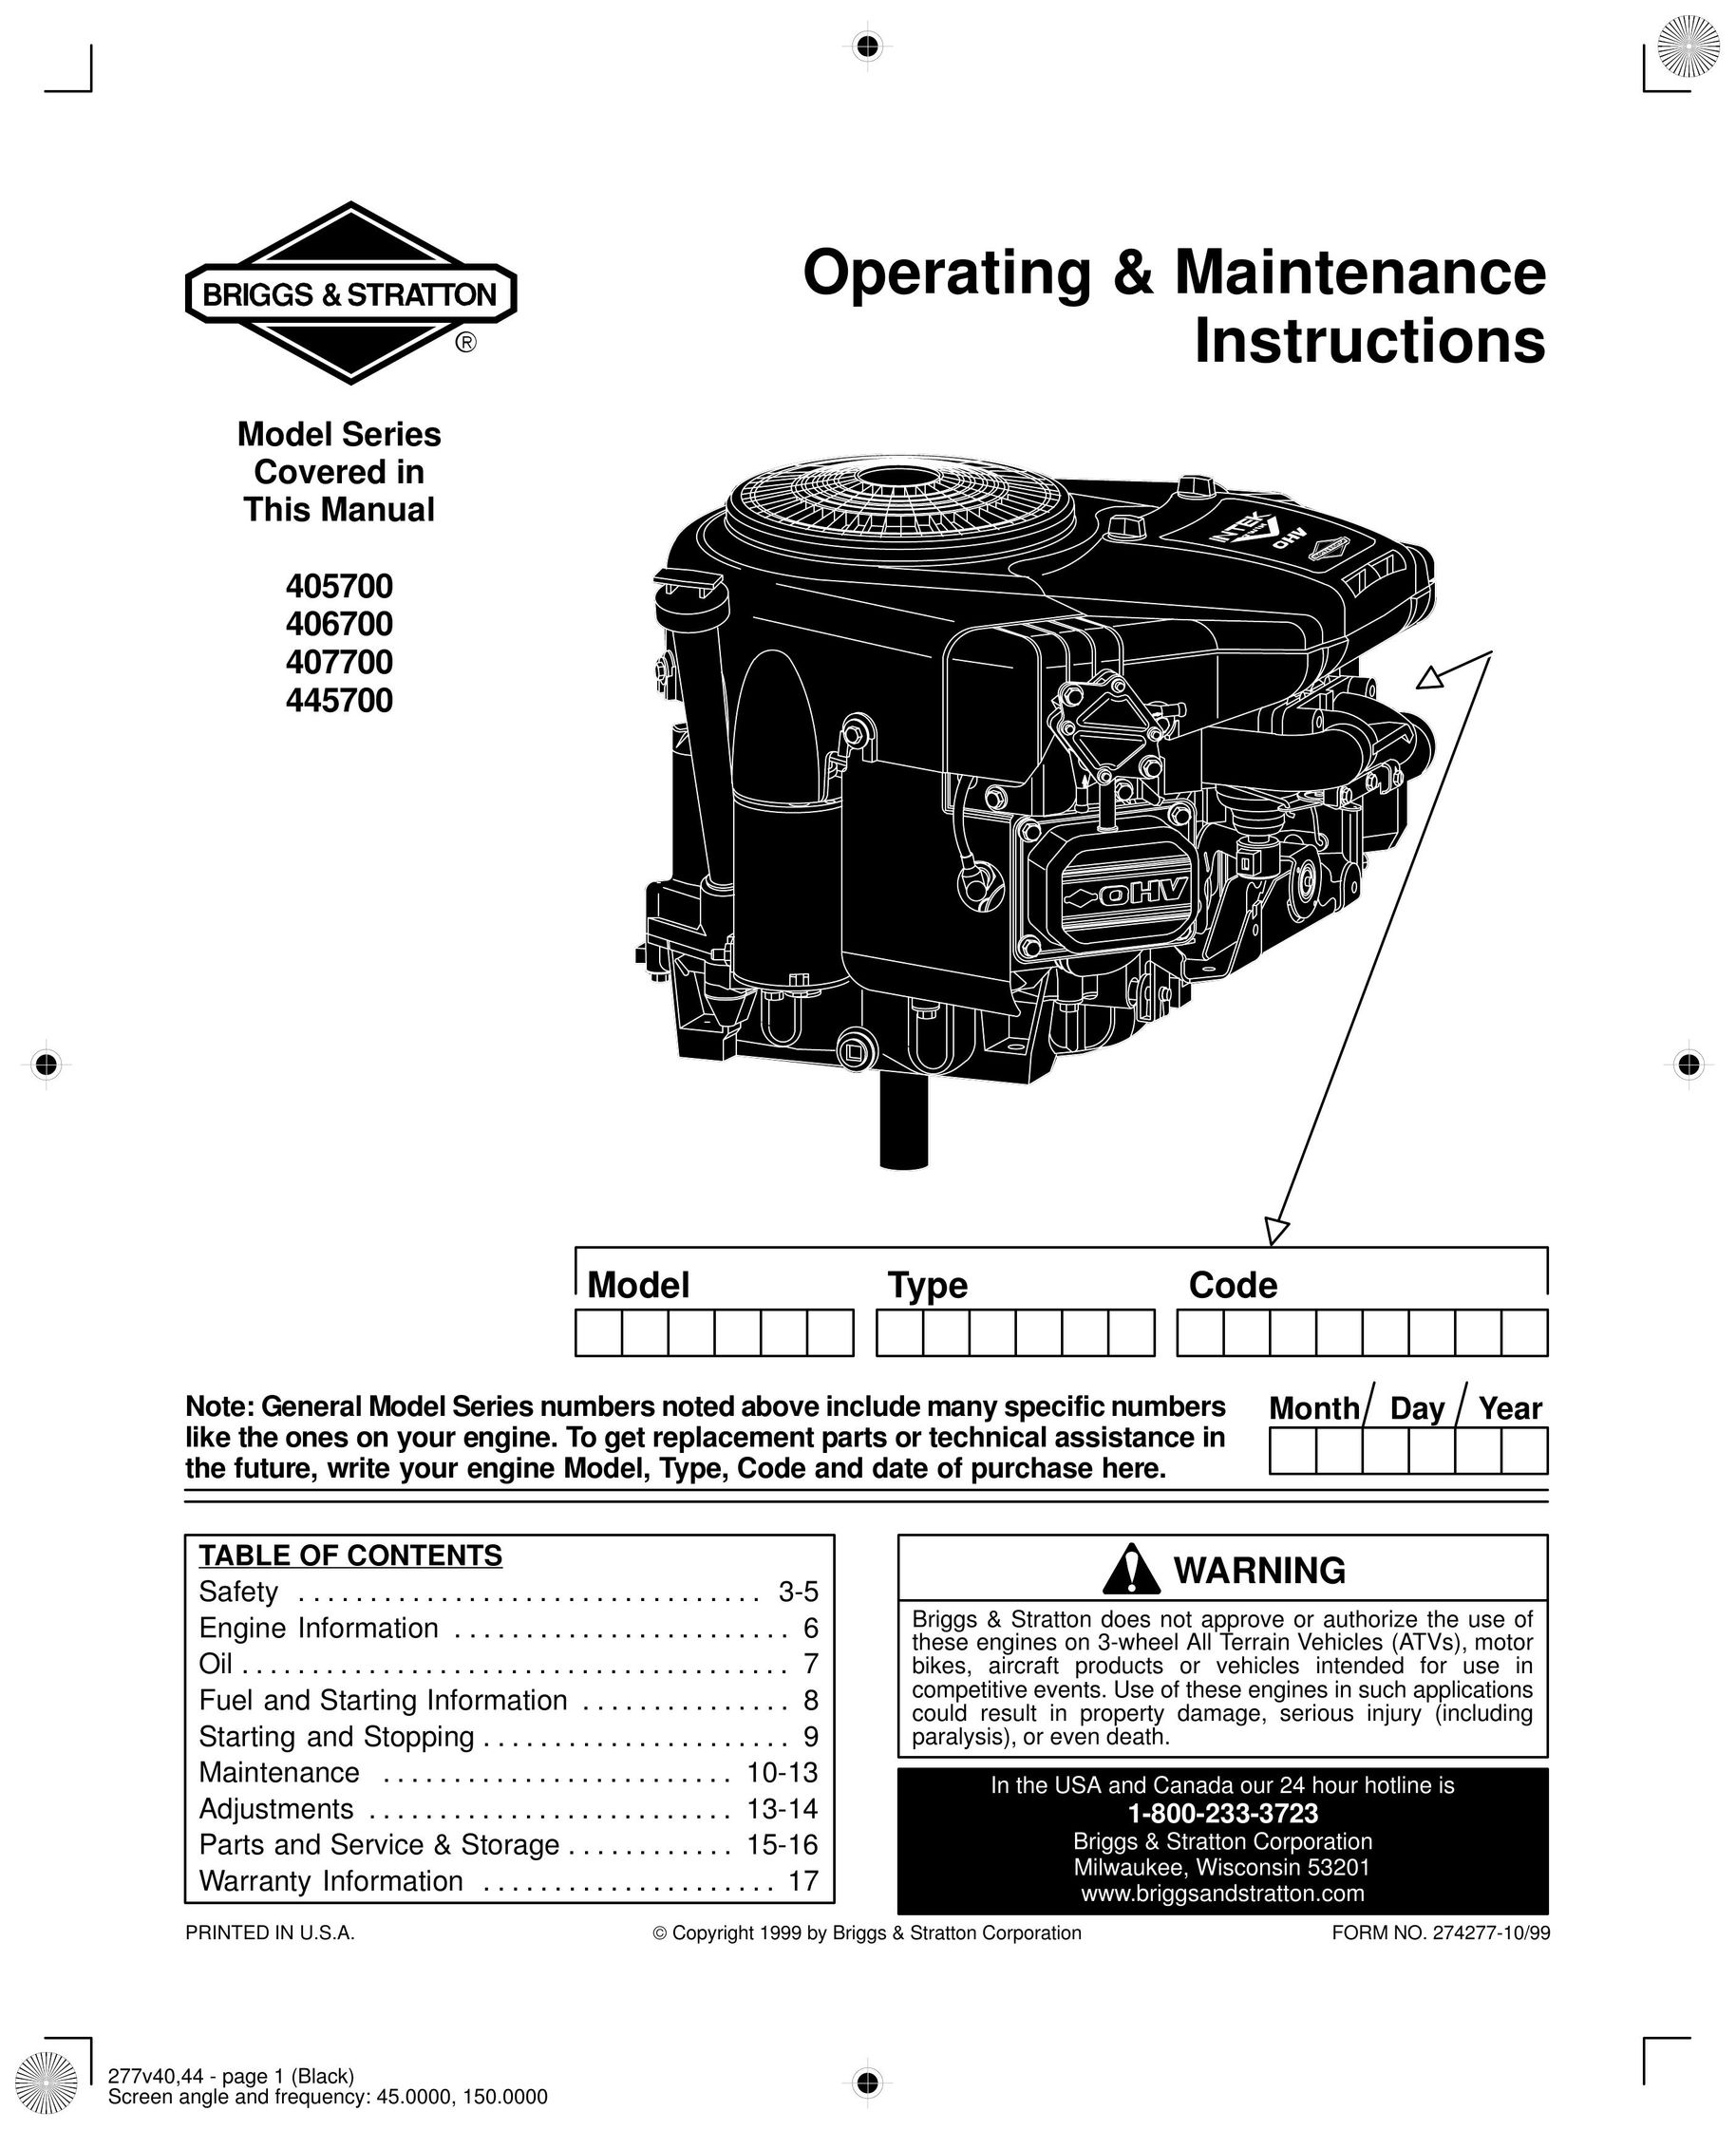 Briggs & Stratton 406700 Air Cleaner User Manual